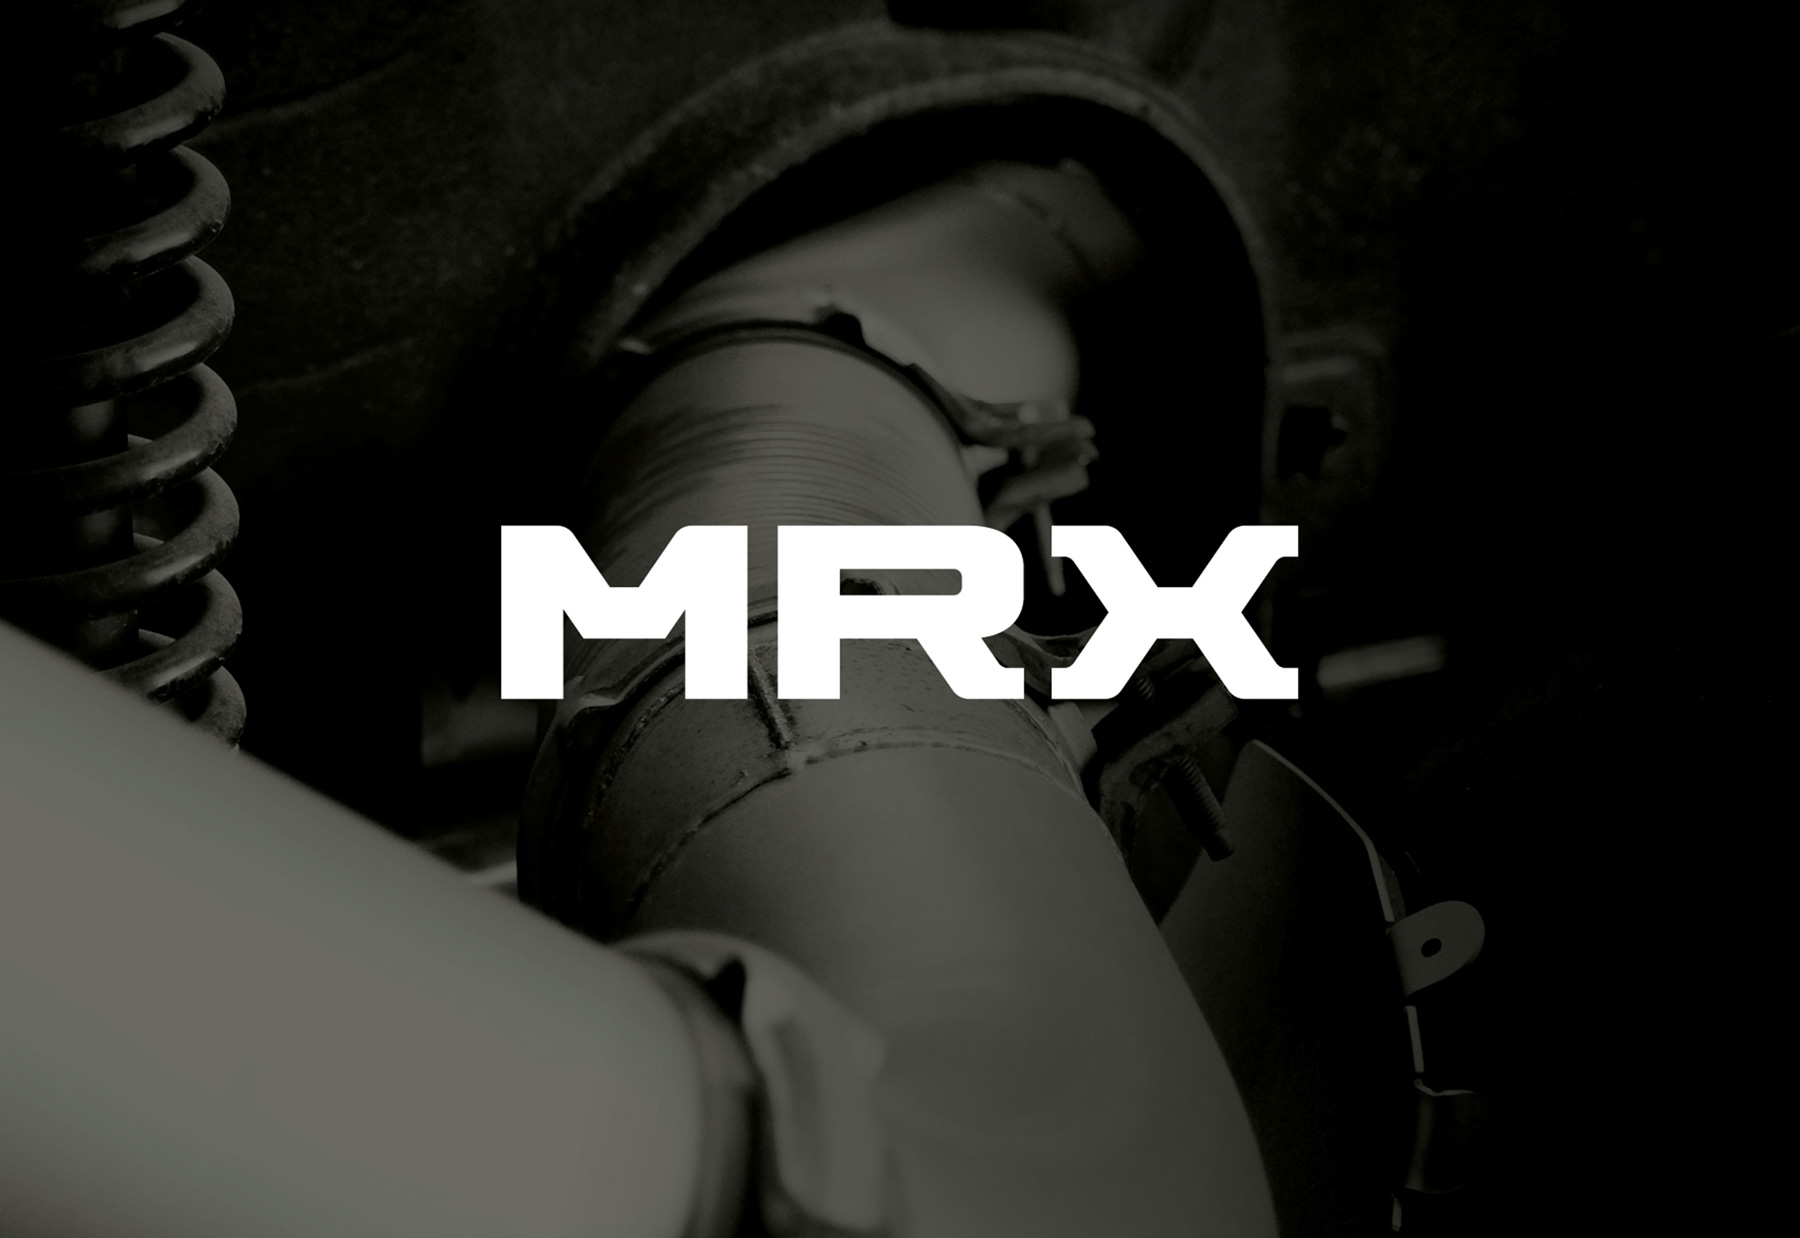 MRX brand and logo